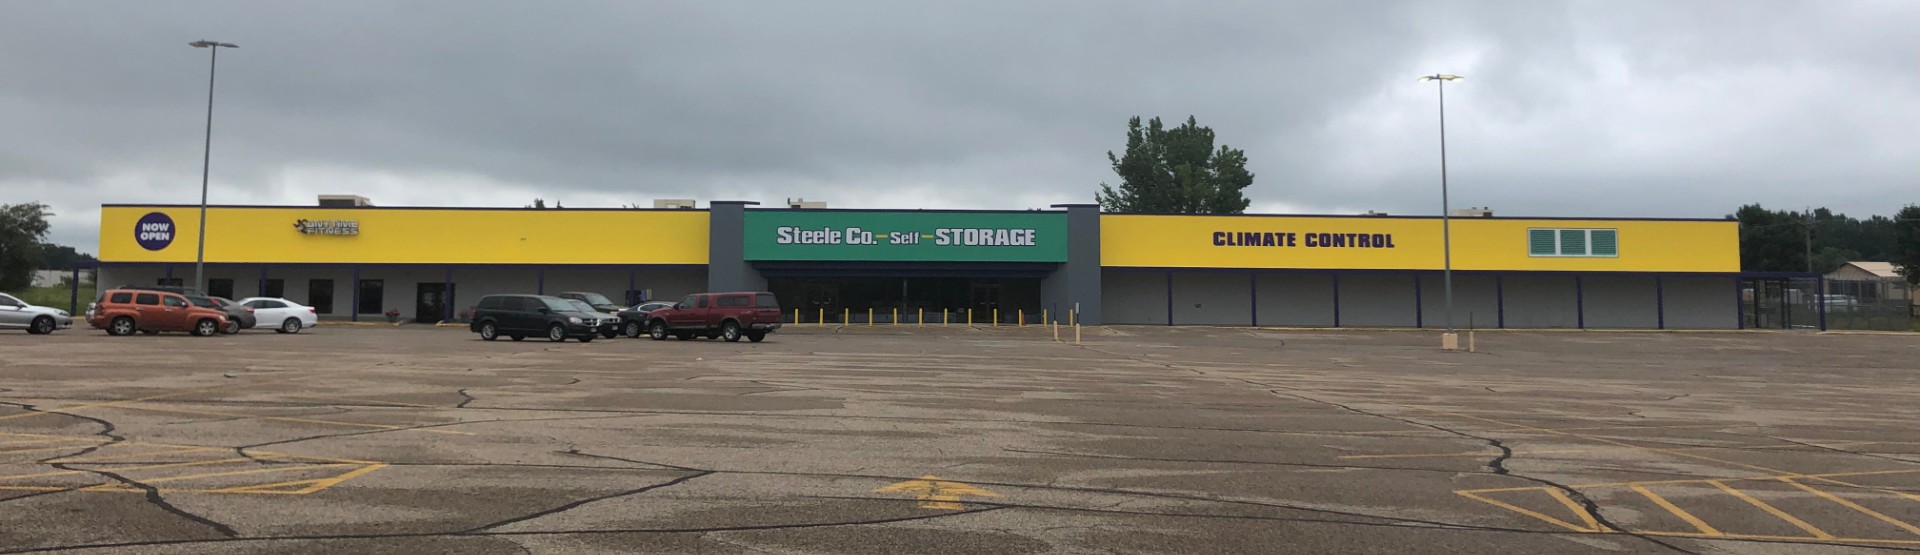 Steele Co. Self Storage in Owatonna, MN